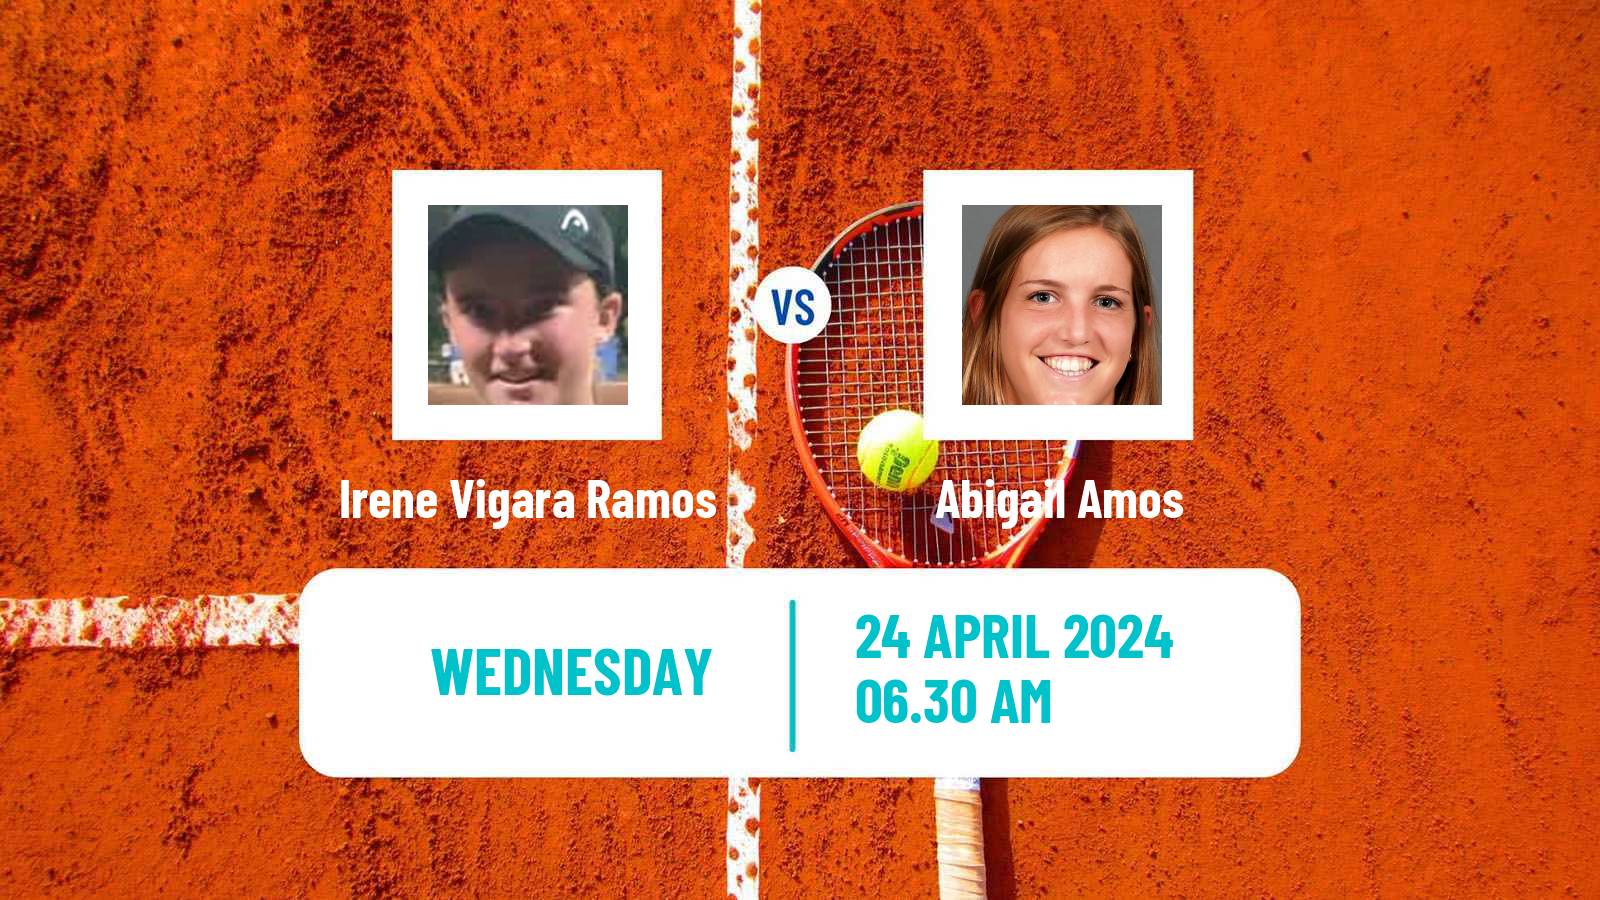 Tennis ITF W15 Telde 4 Women Irene Vigara Ramos - Abigail Amos